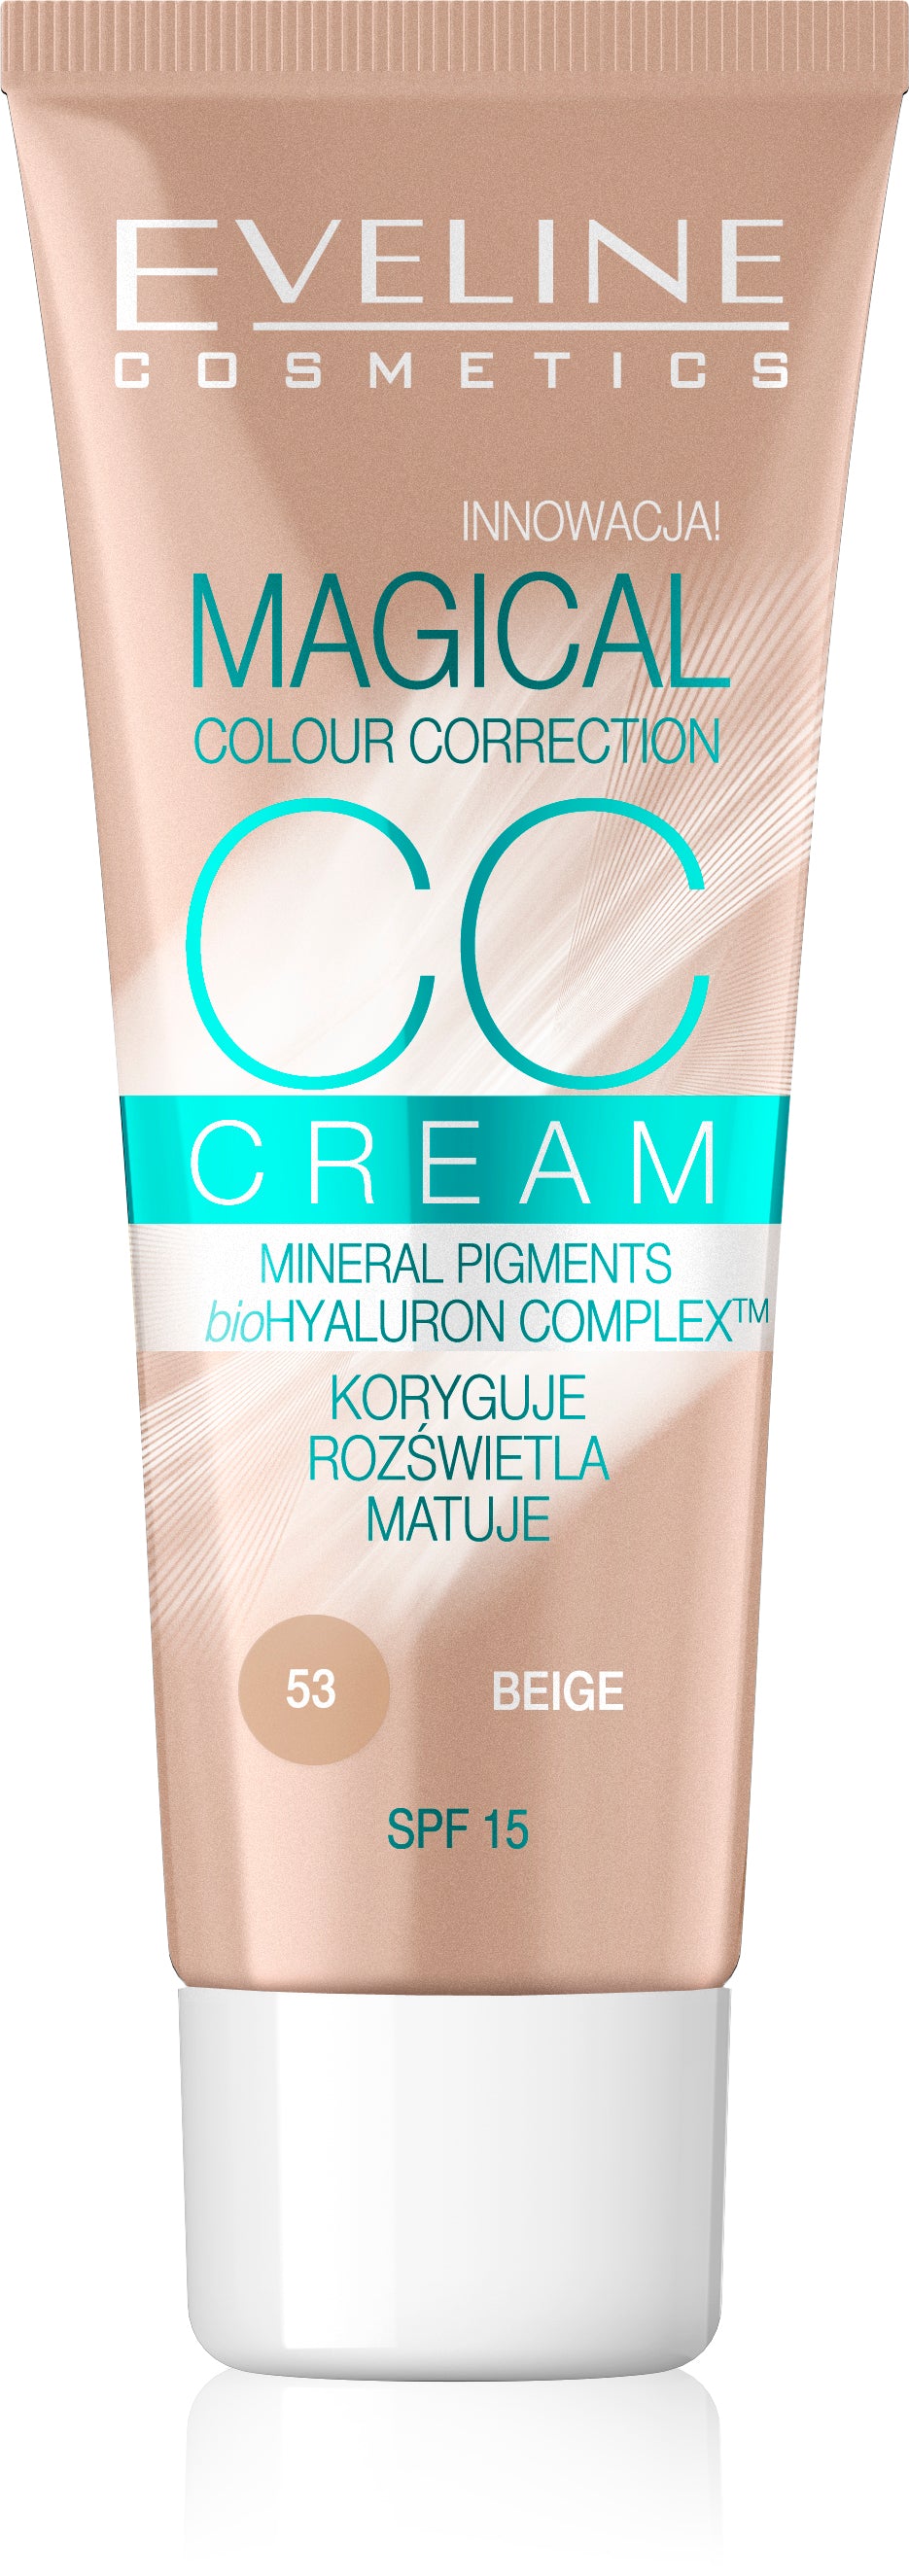 CC Cream Magical Colour Correction Light Beige 30ML